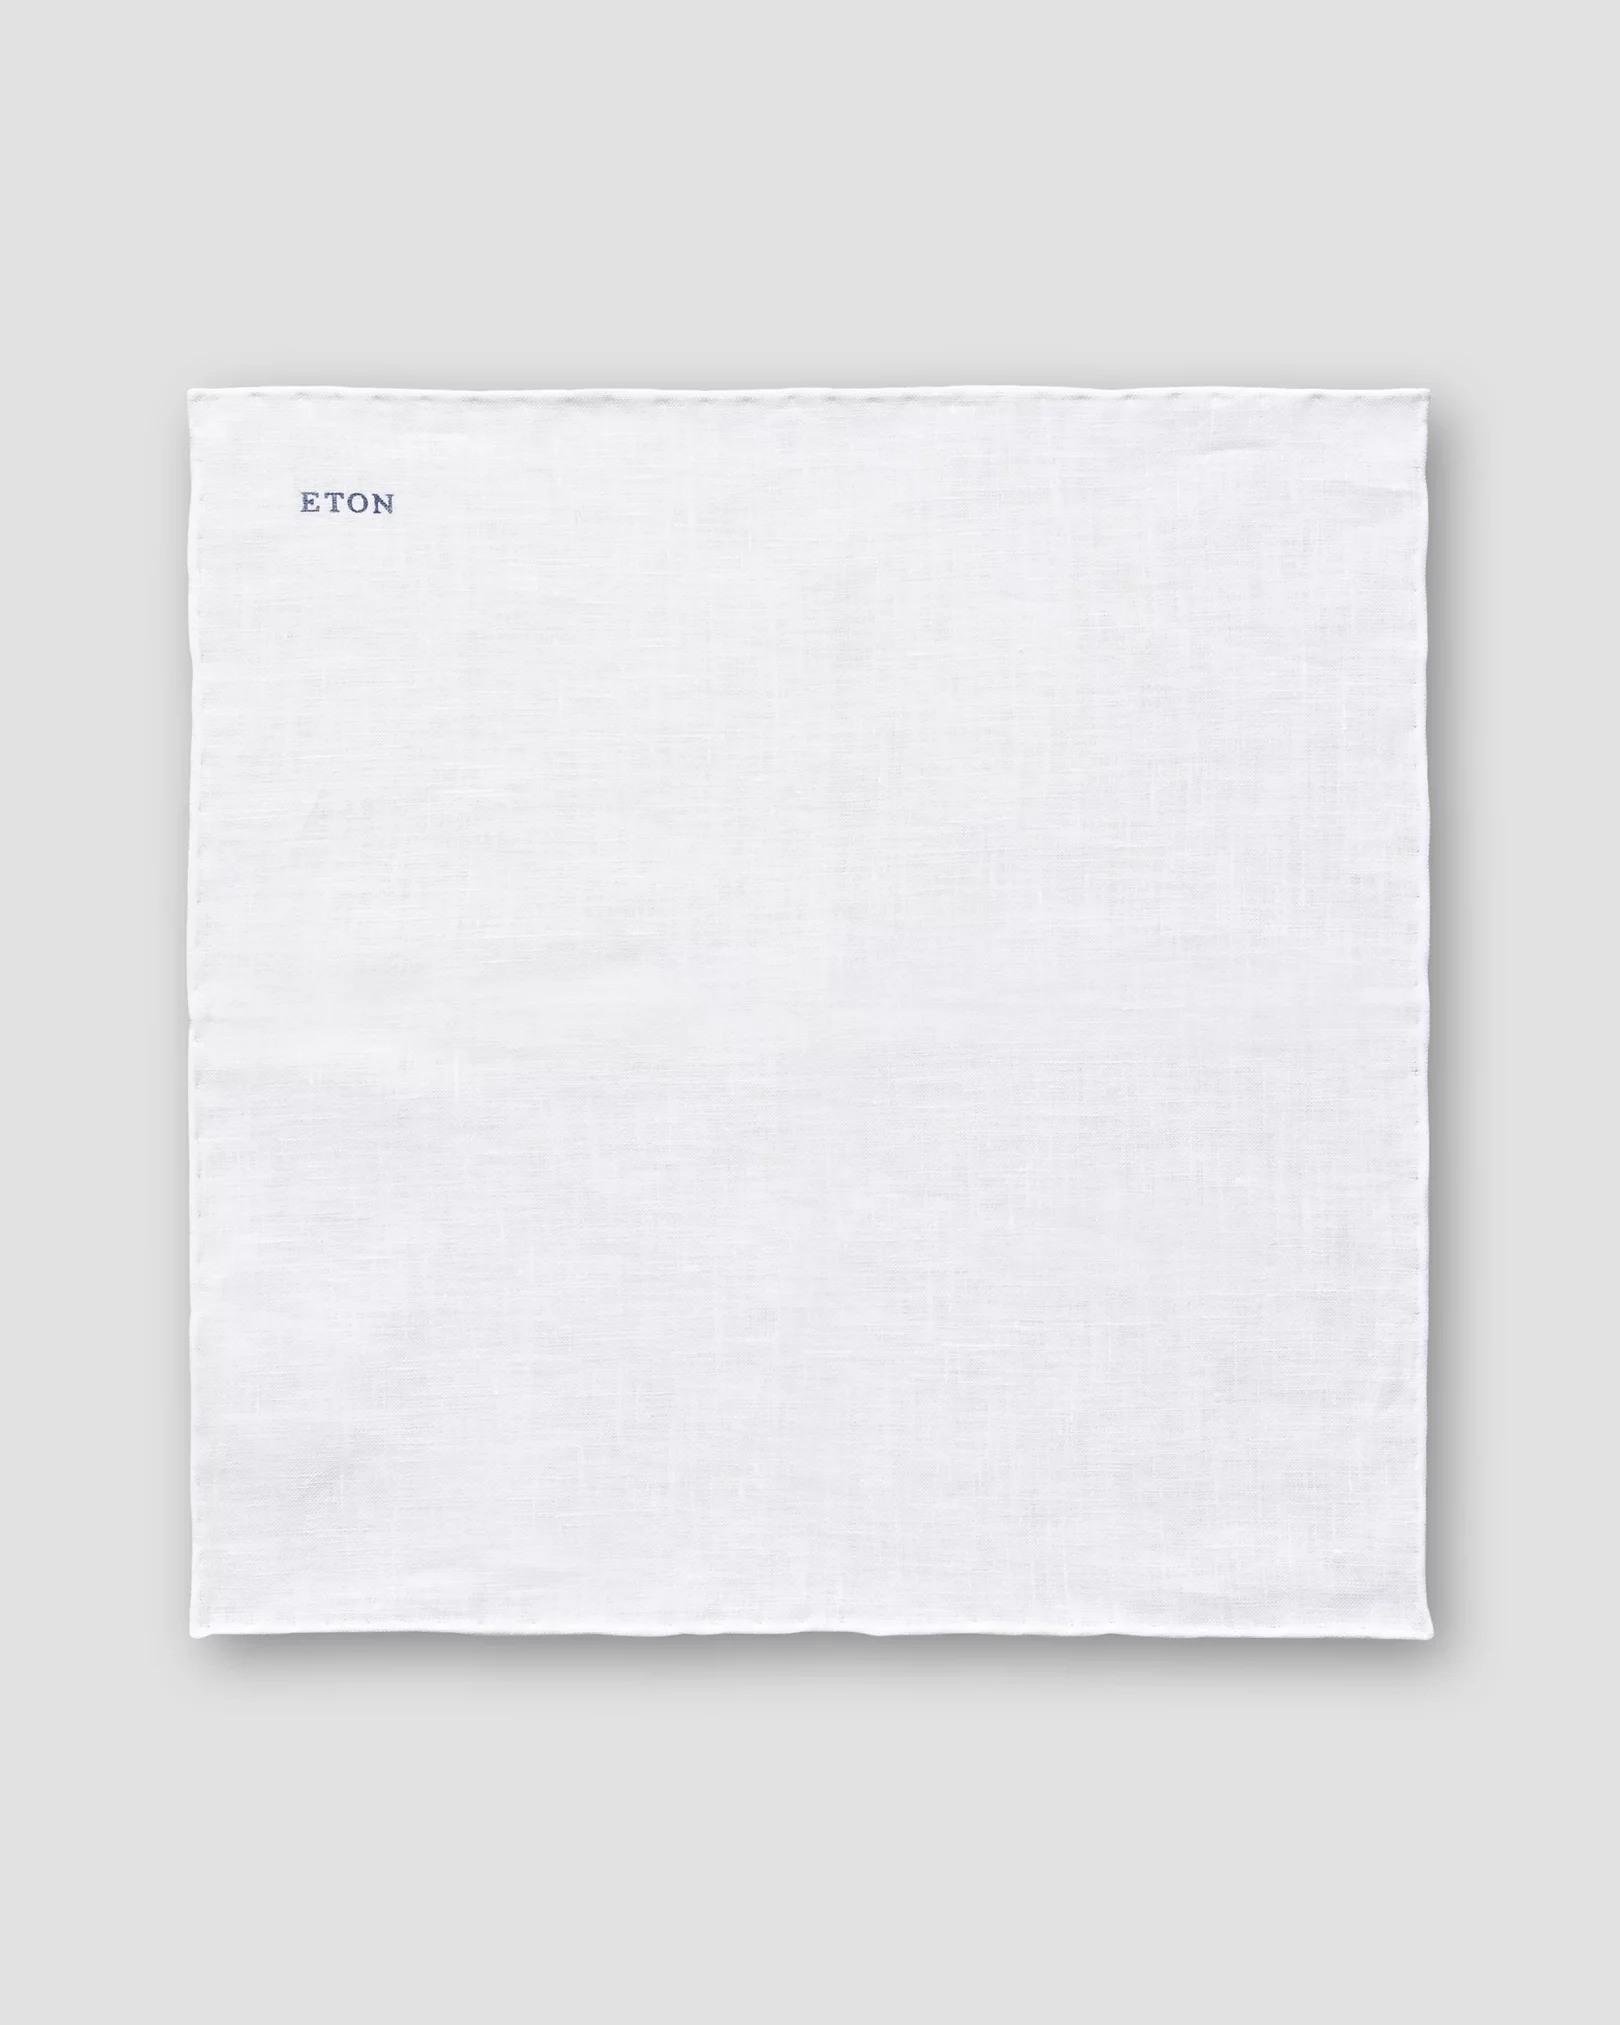 Eton - white linen pocket square